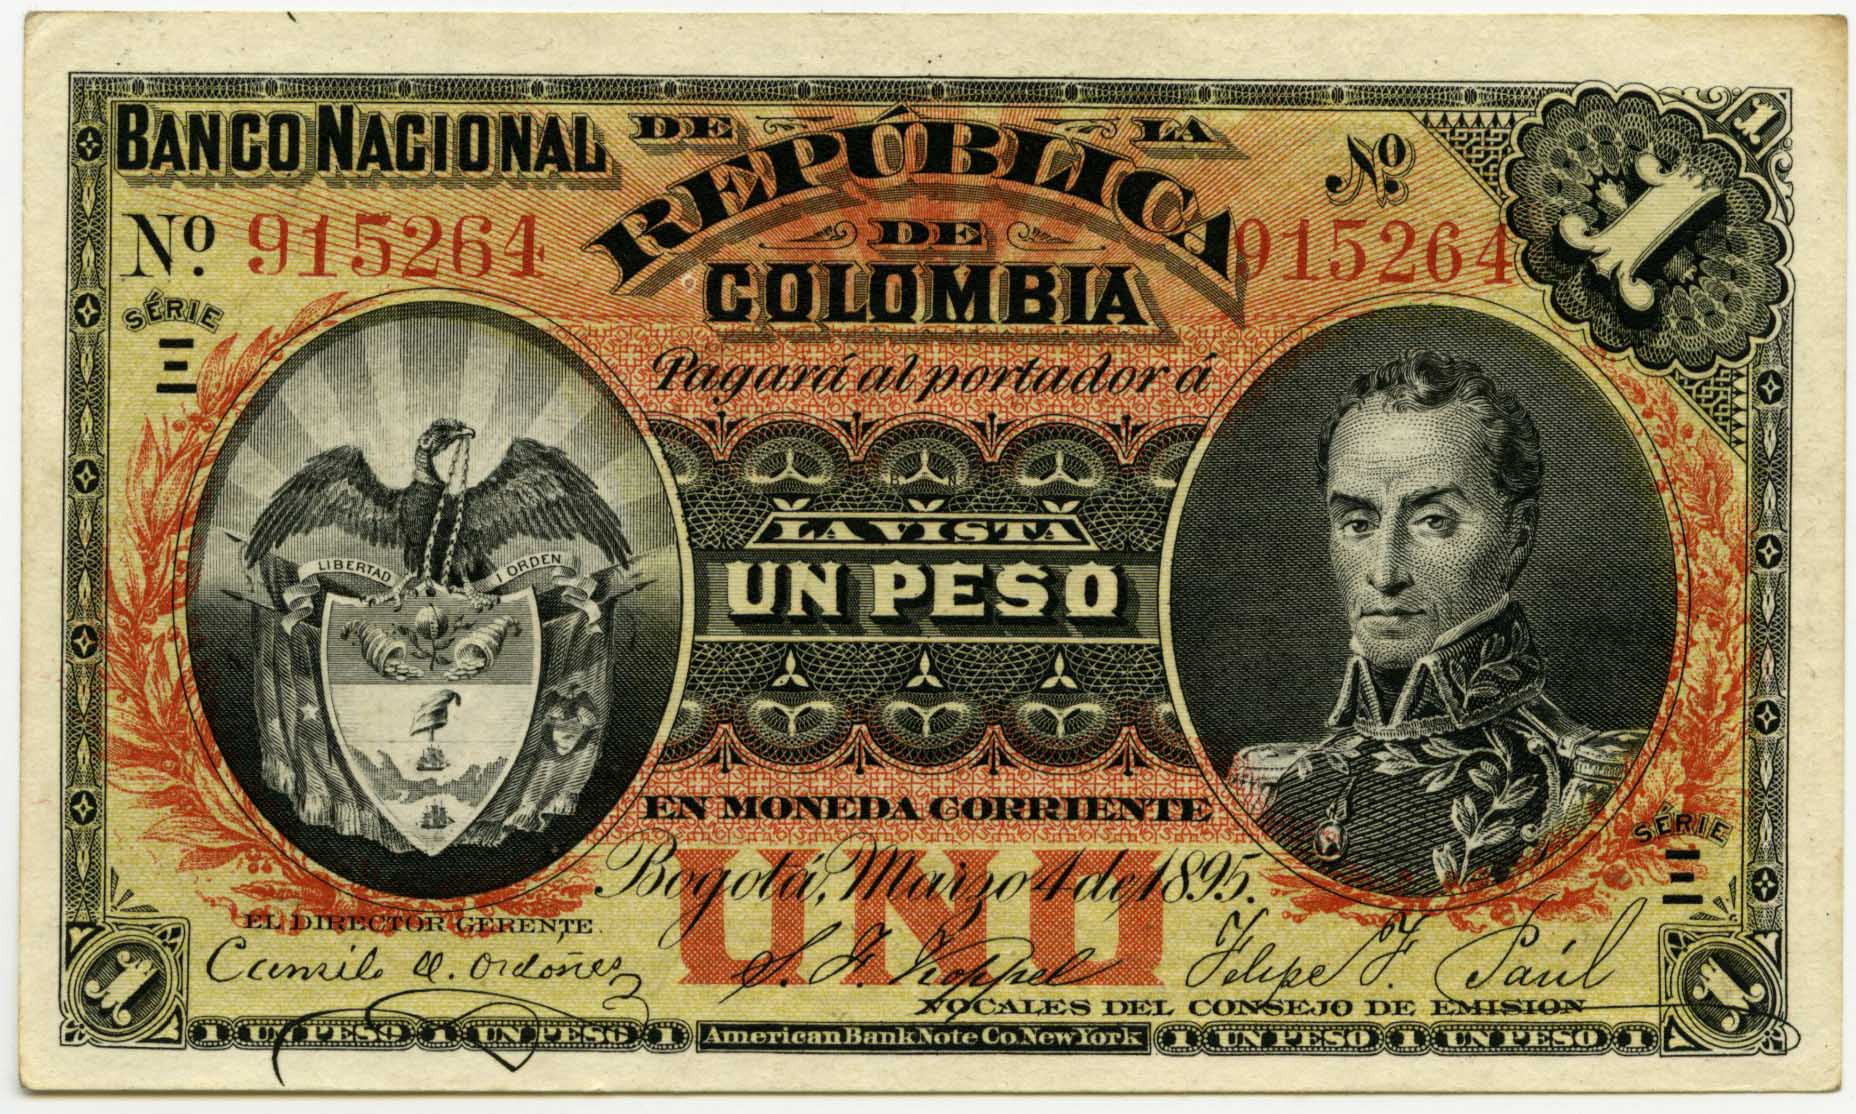 $1 In Colombian Pesos